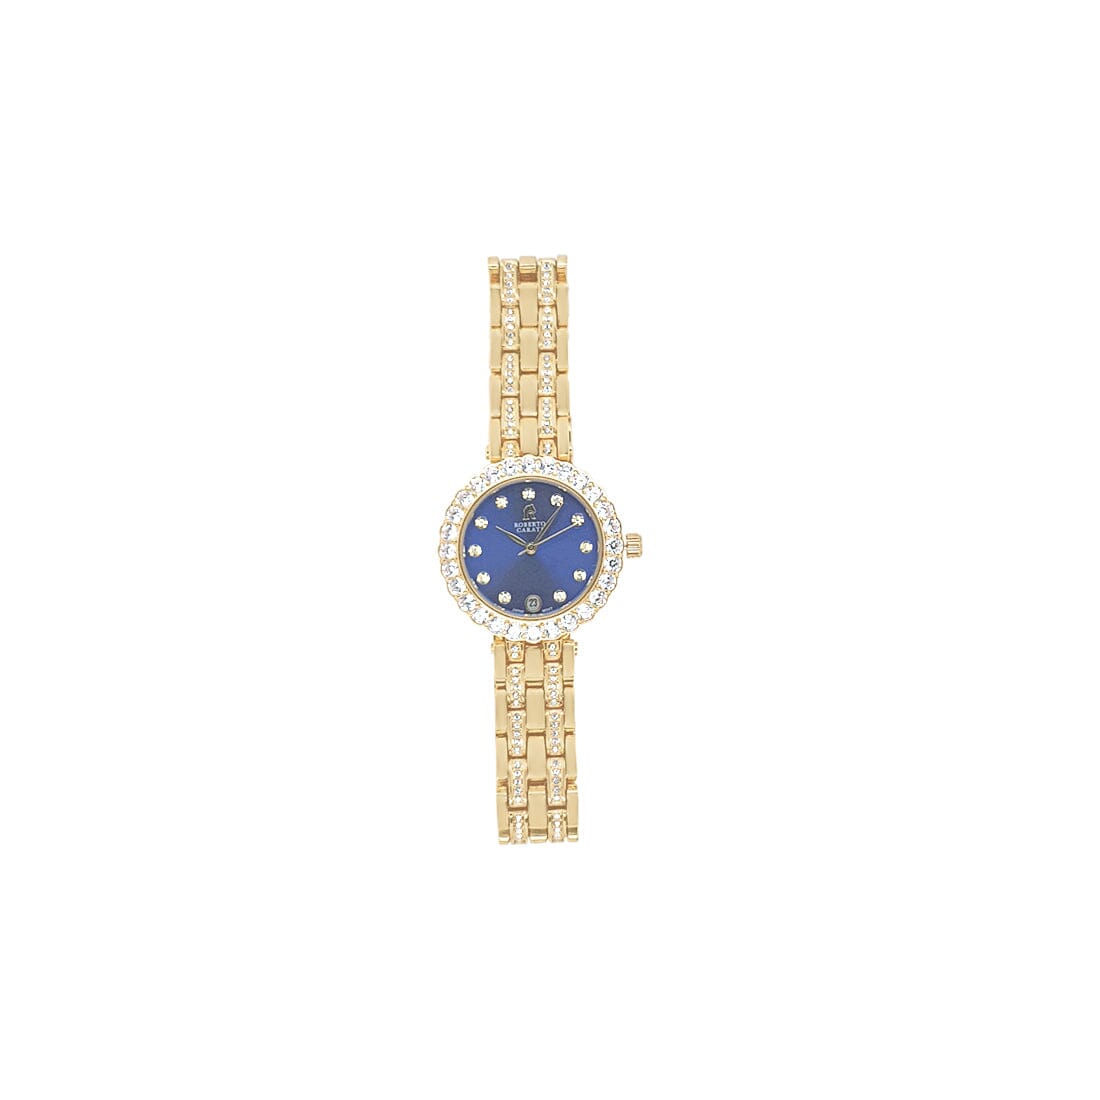 Roberto Carati Milania Blue Face Gold Coloured Watch M1027 BE-V7 Watches Roberto Carati 